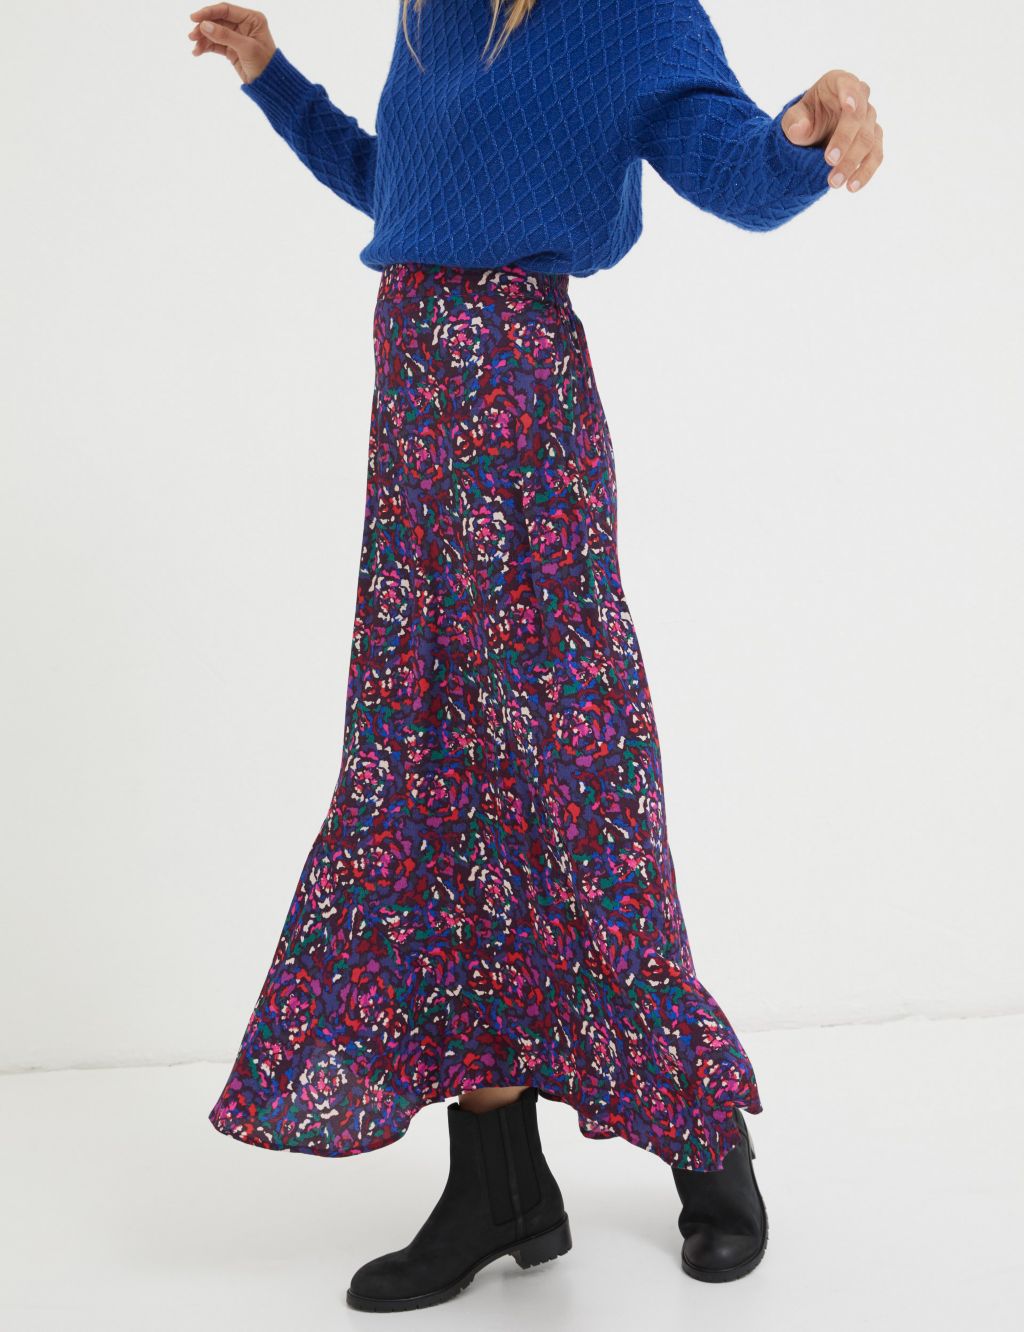 Floral Midi A-Line Skirt image 1